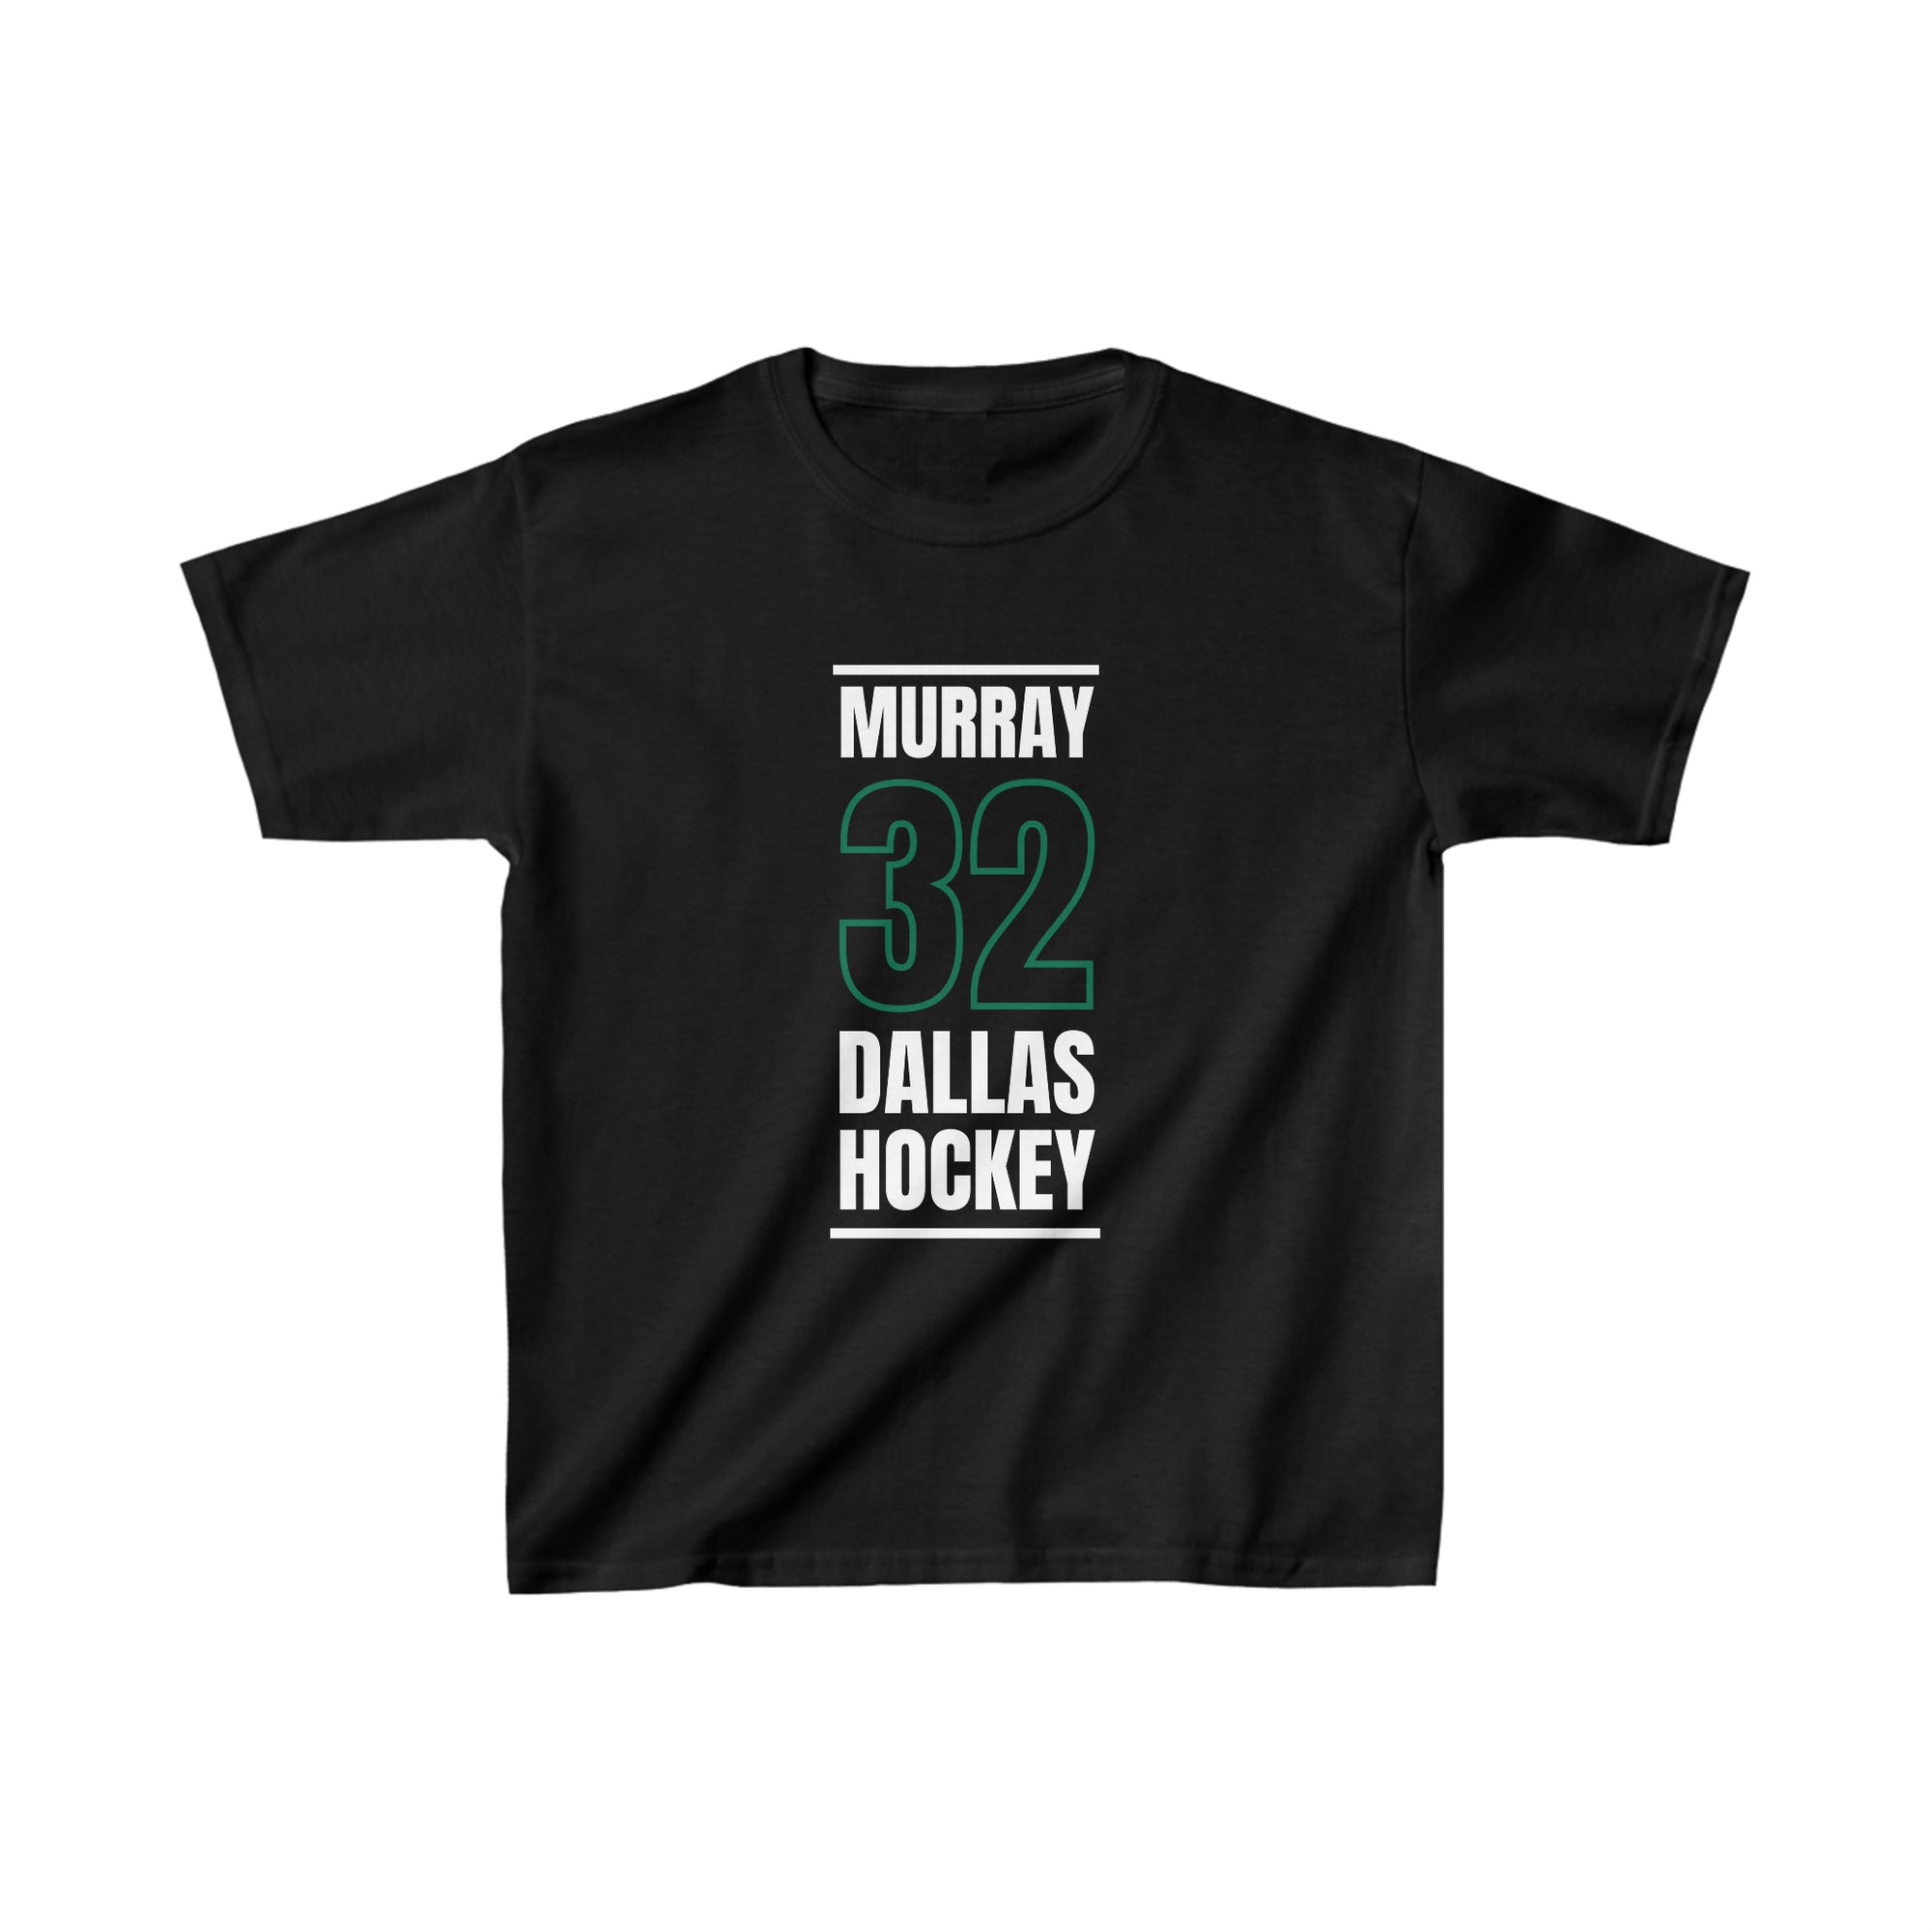 Murray 32 Dallas Hockey Black Vertical Design Kids Tee